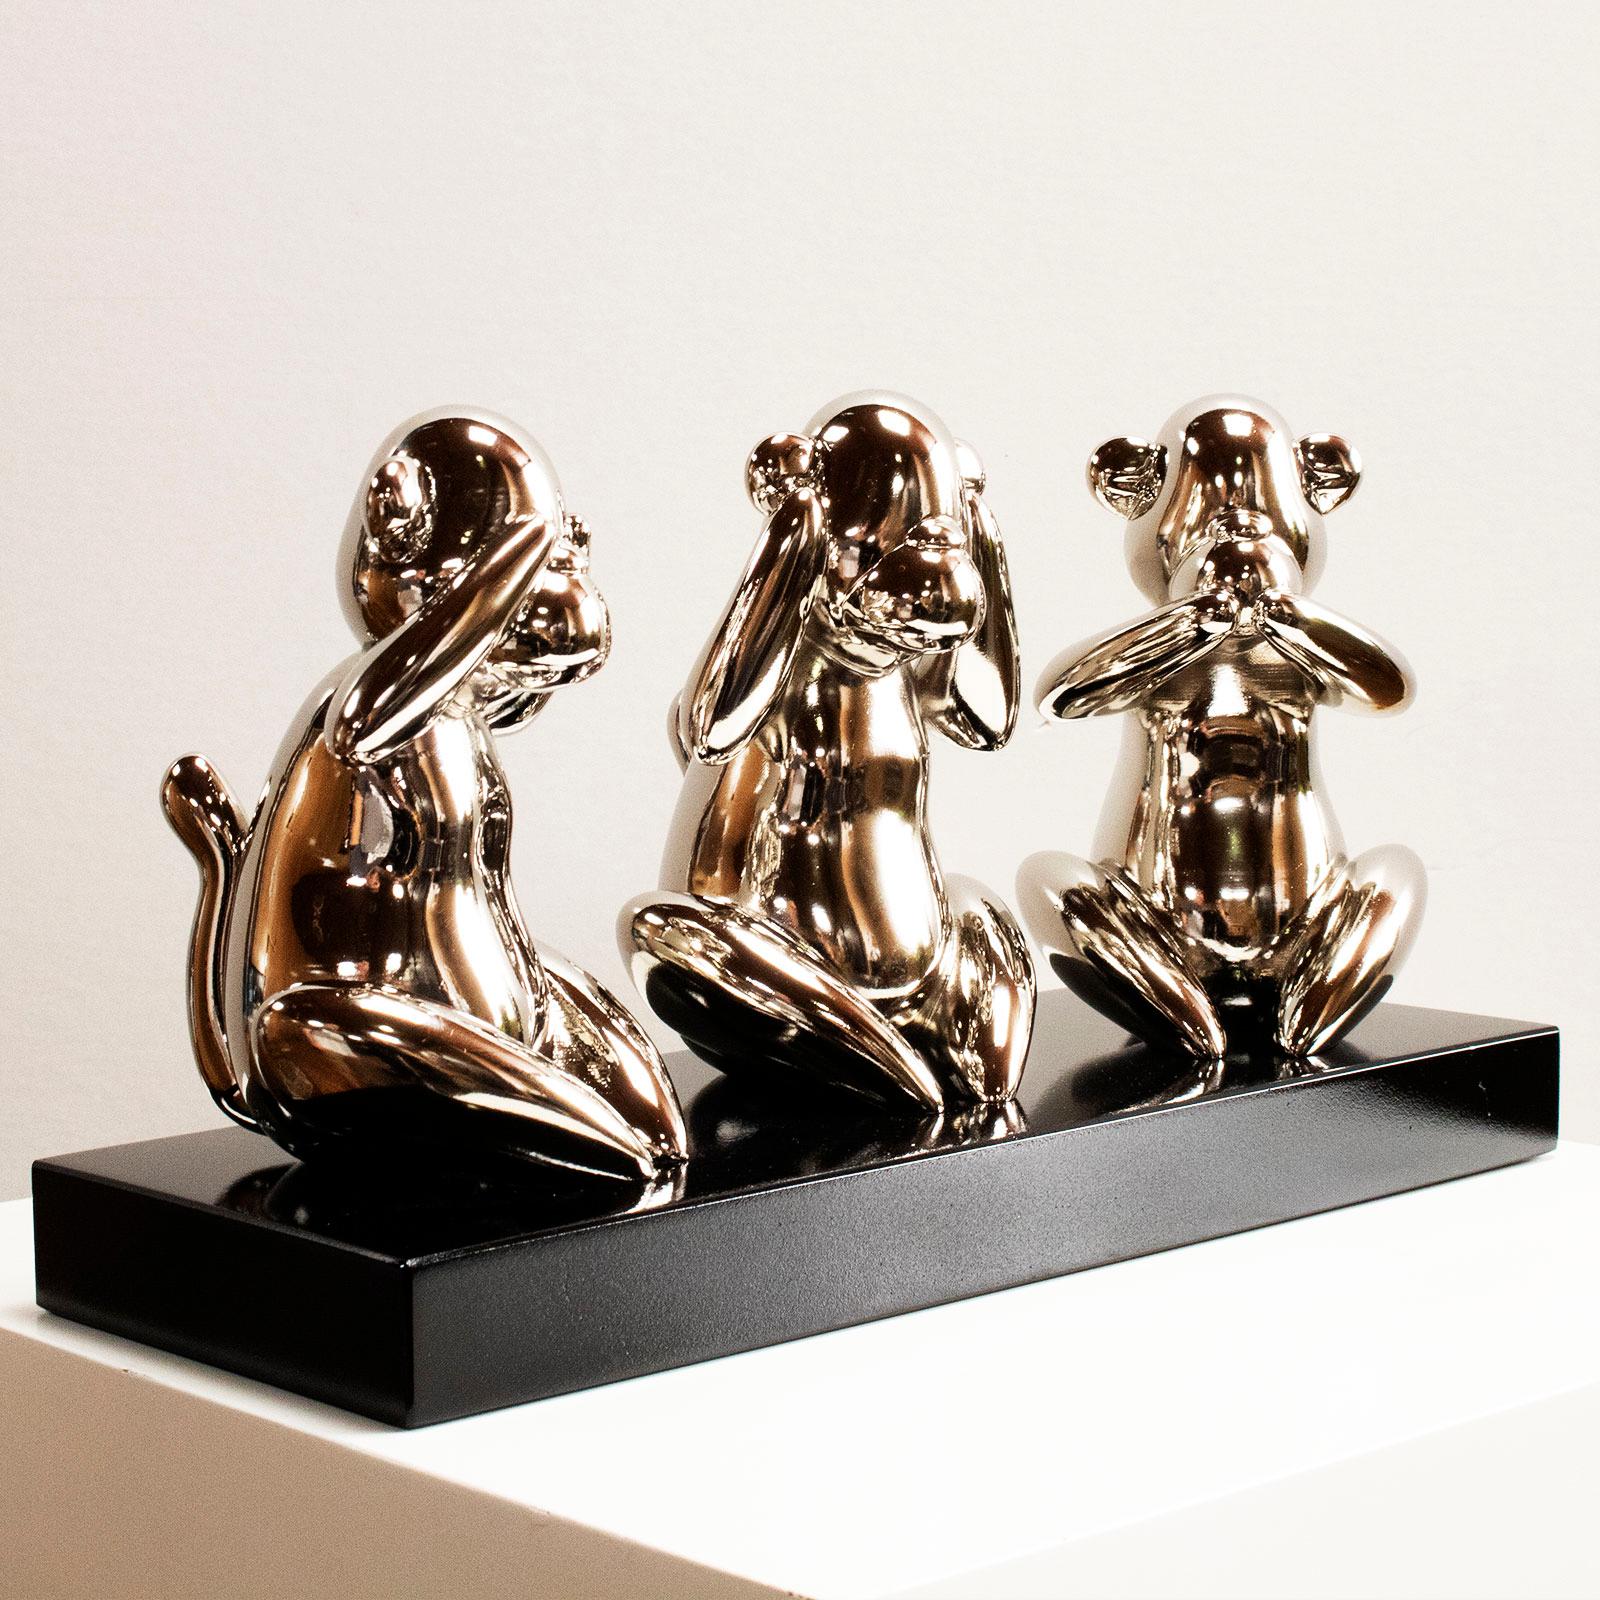 Wise monkeys nickel - Miguel Guía, Pop Art Nickel layer Sculpture 5